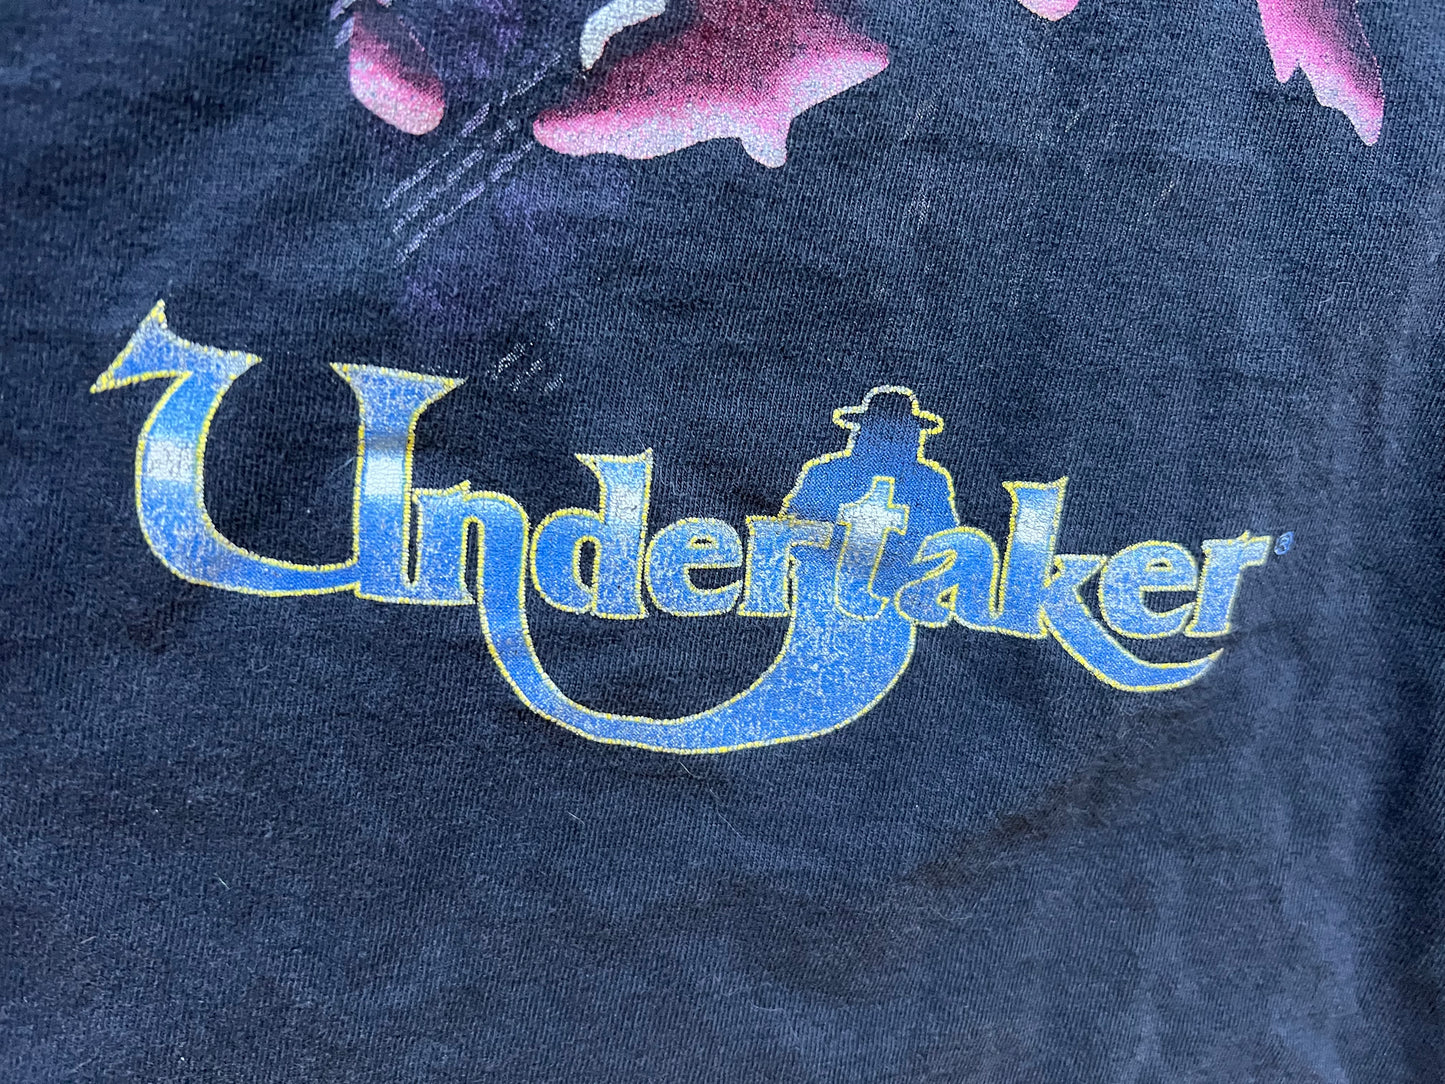 1996 WWF Undertaker “R.I.P.” shirt